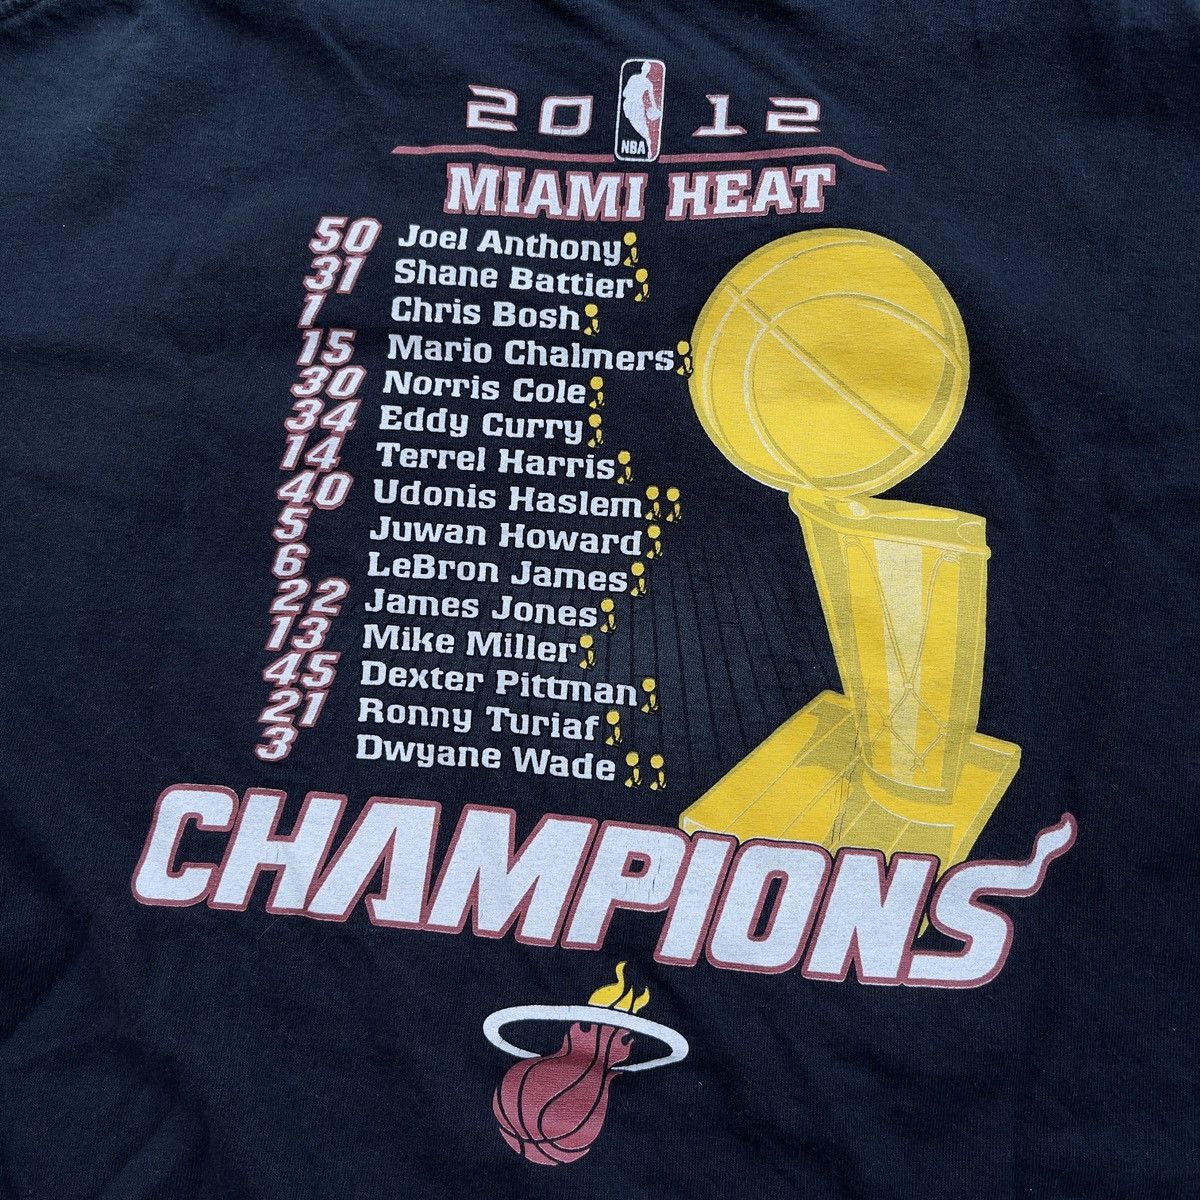 Vintage 2012 NBA Champions Miami Heat Roster Shirt Size US M / EU 48-50 / 2 - 6 Preview